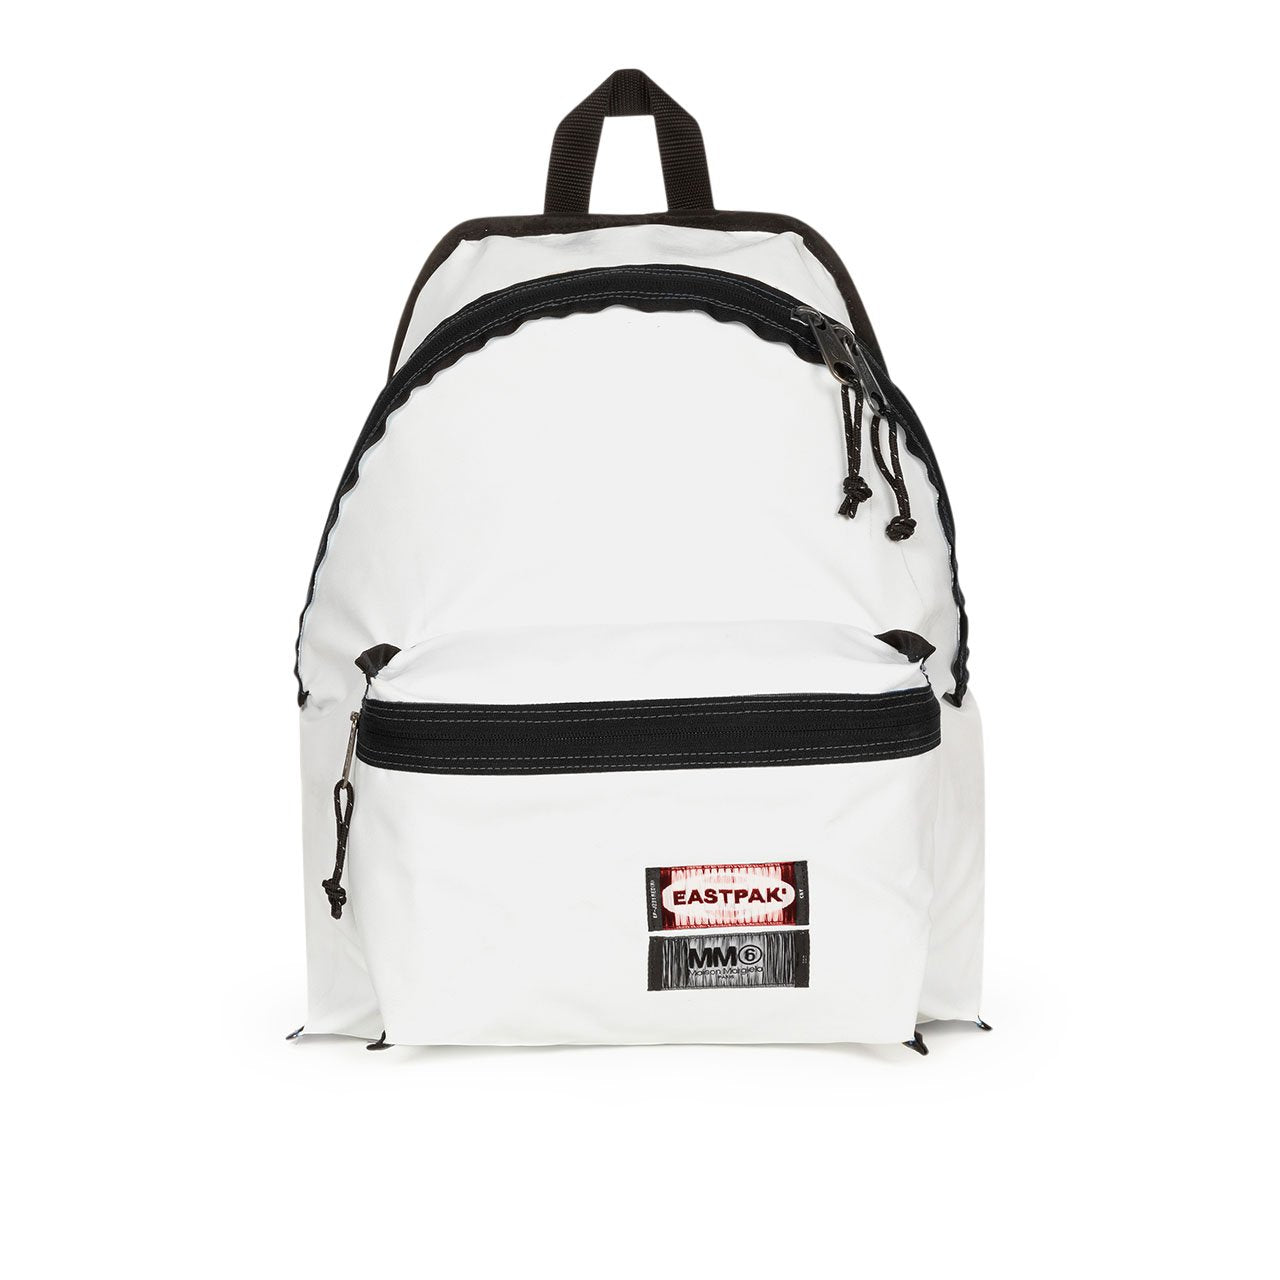 eastpak eastpak x mm6 padded reversible backpack (black) EK0A5BASQ761-BLK